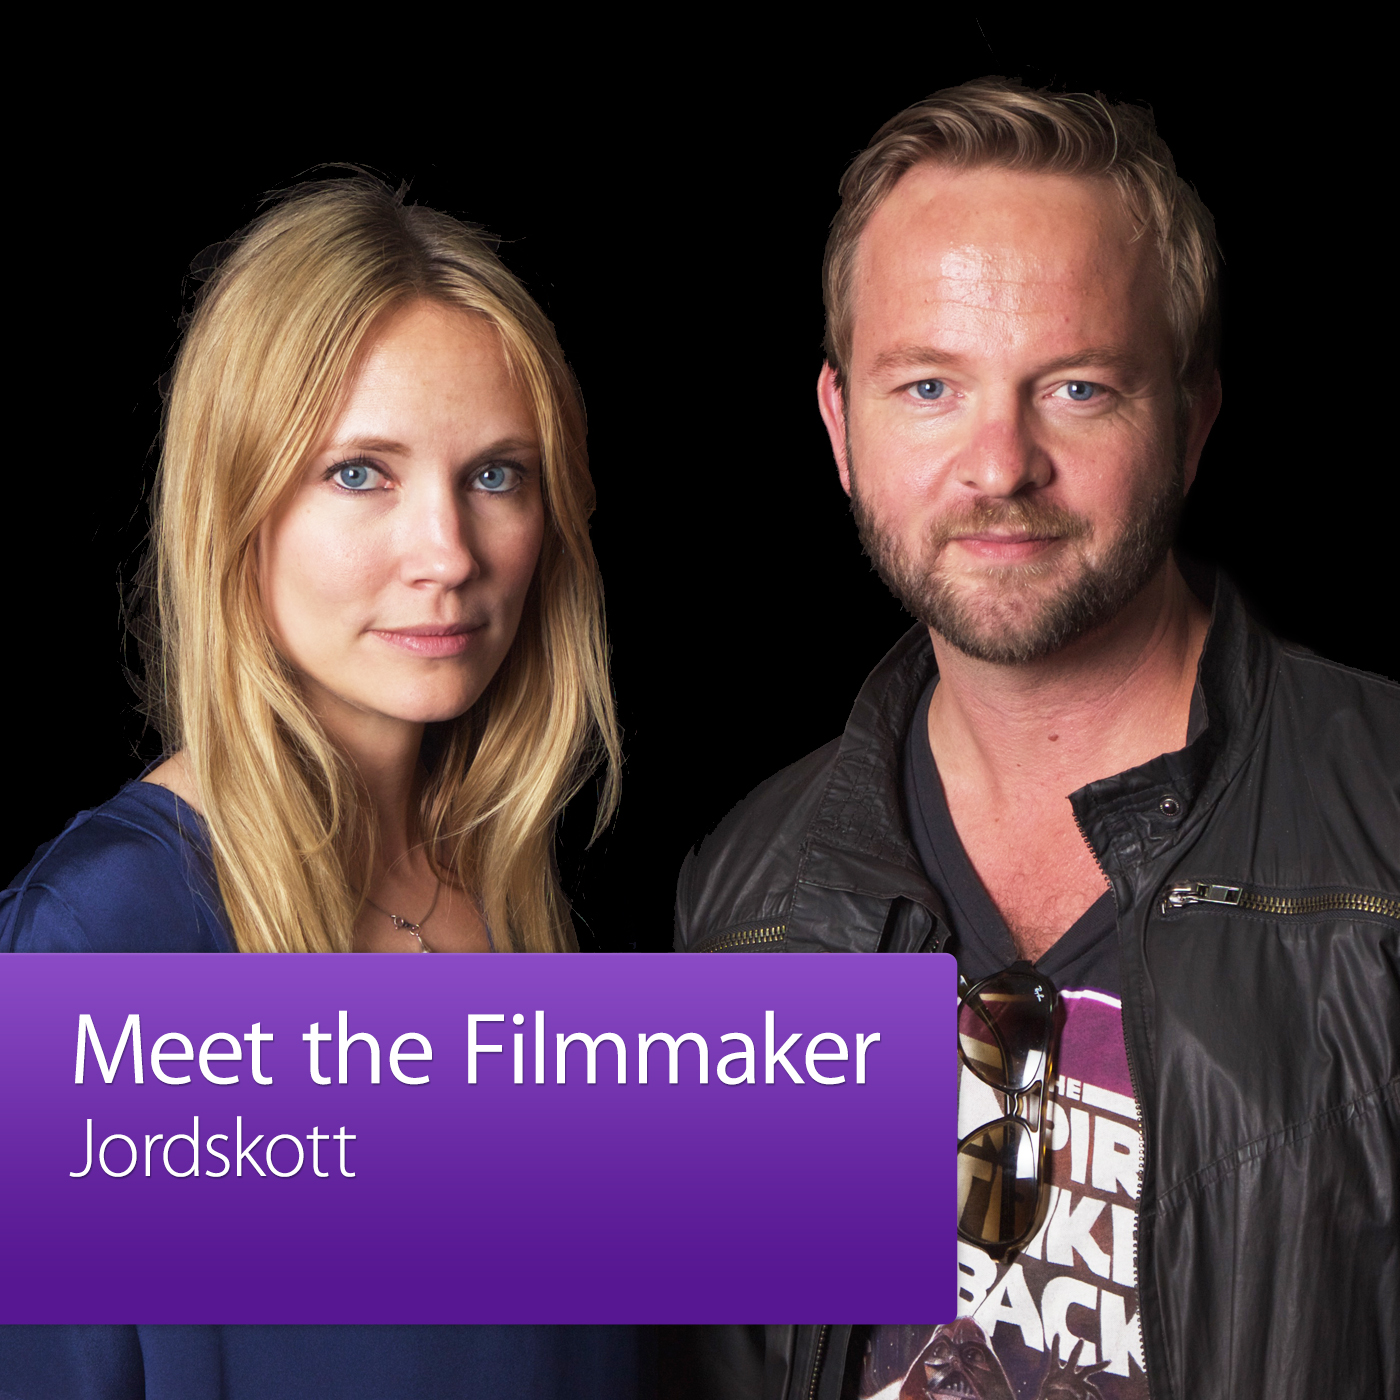 Jordskott: Meet the Filmmaker